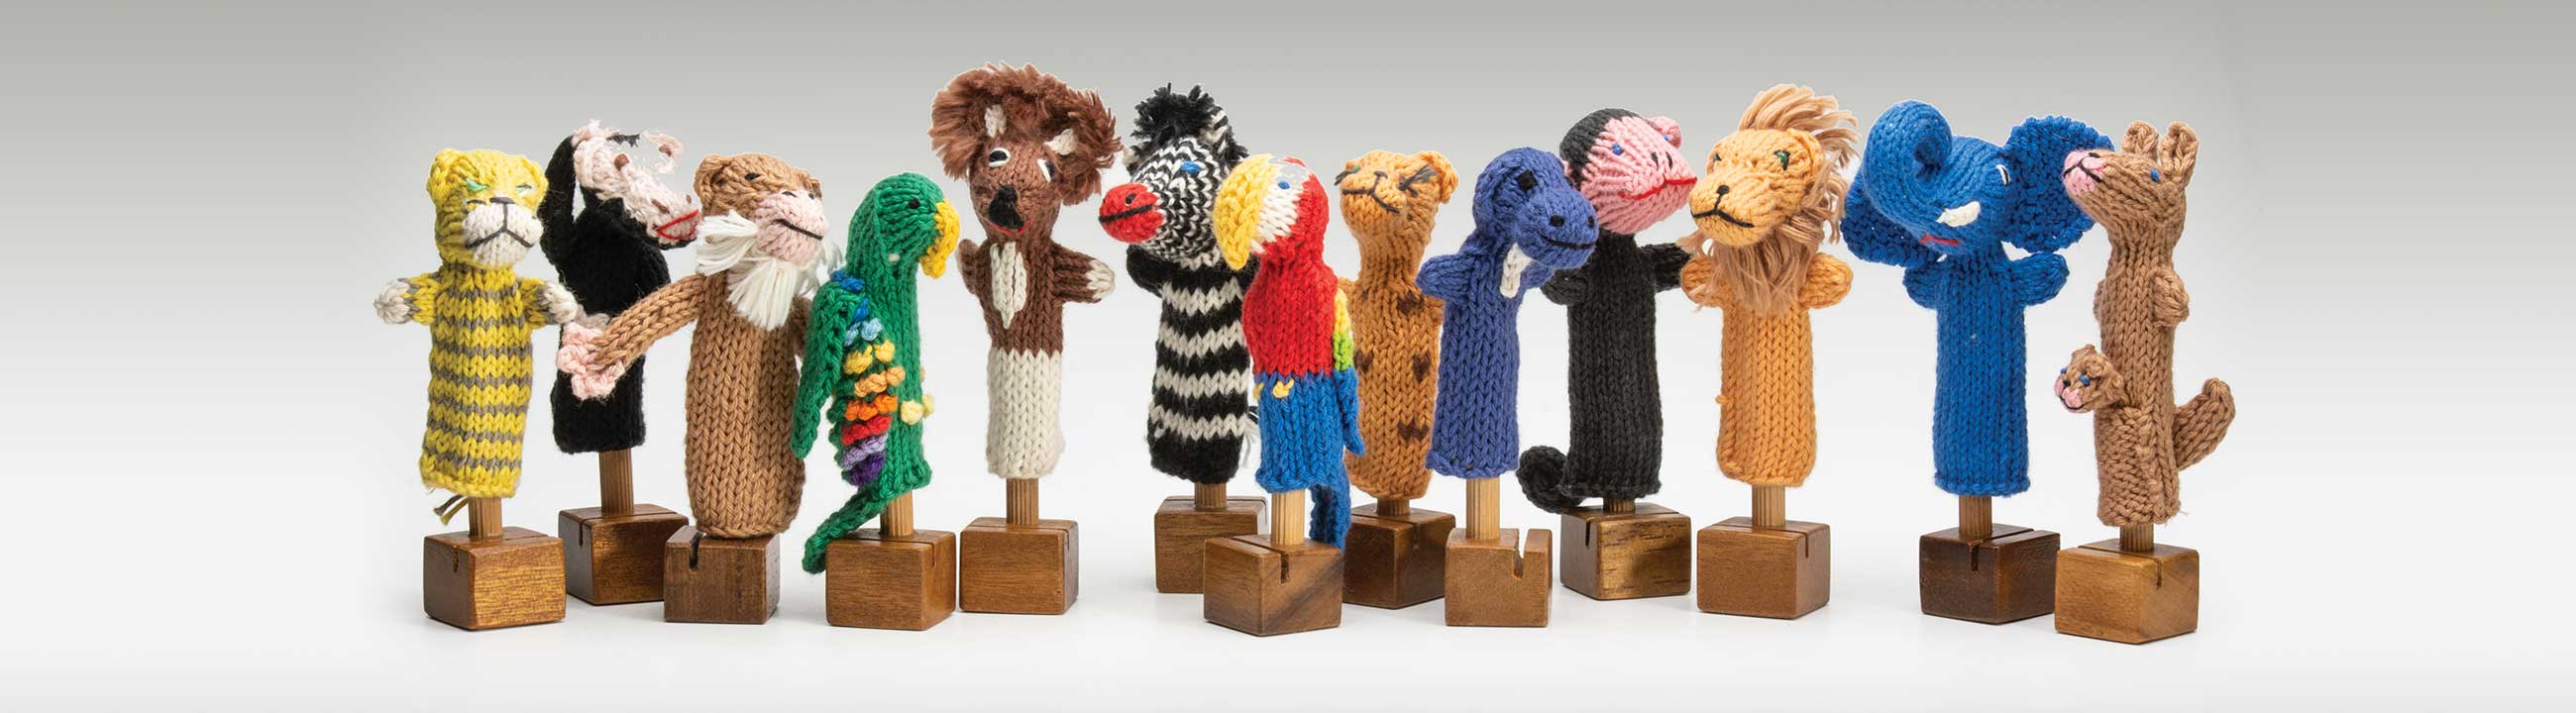 Fair Trade Single Puppet Stand by Lucuma Designs